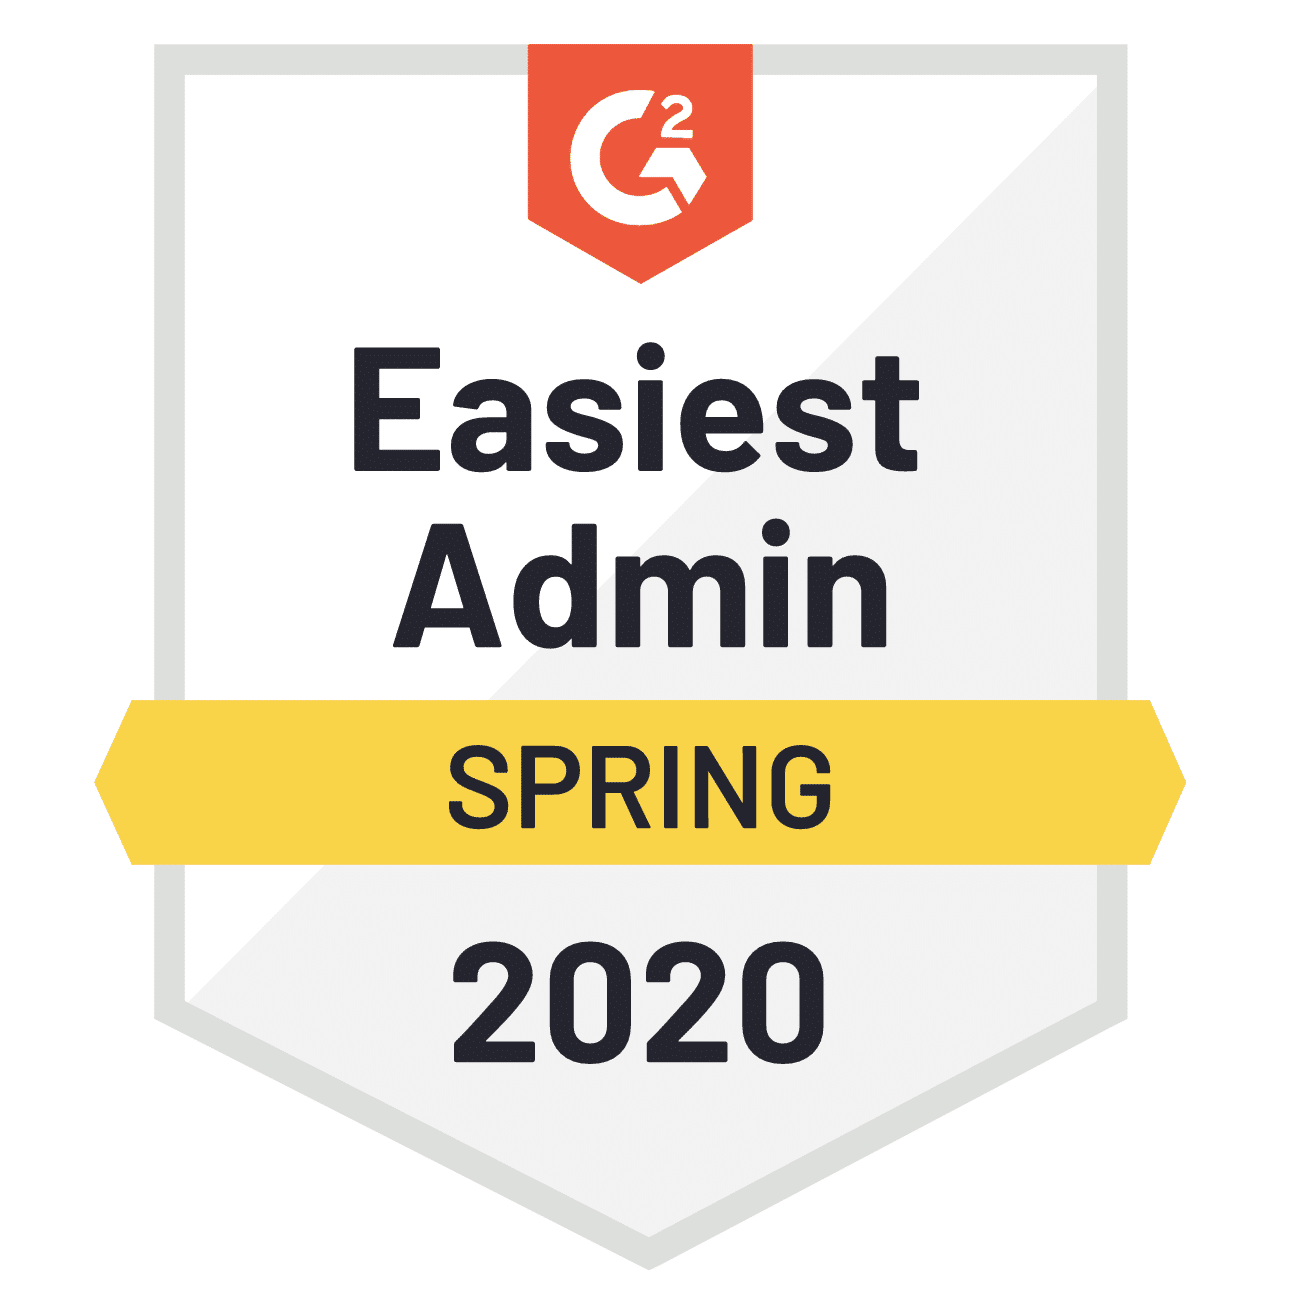 Premio G2 Easiest Admin Primavera 2020